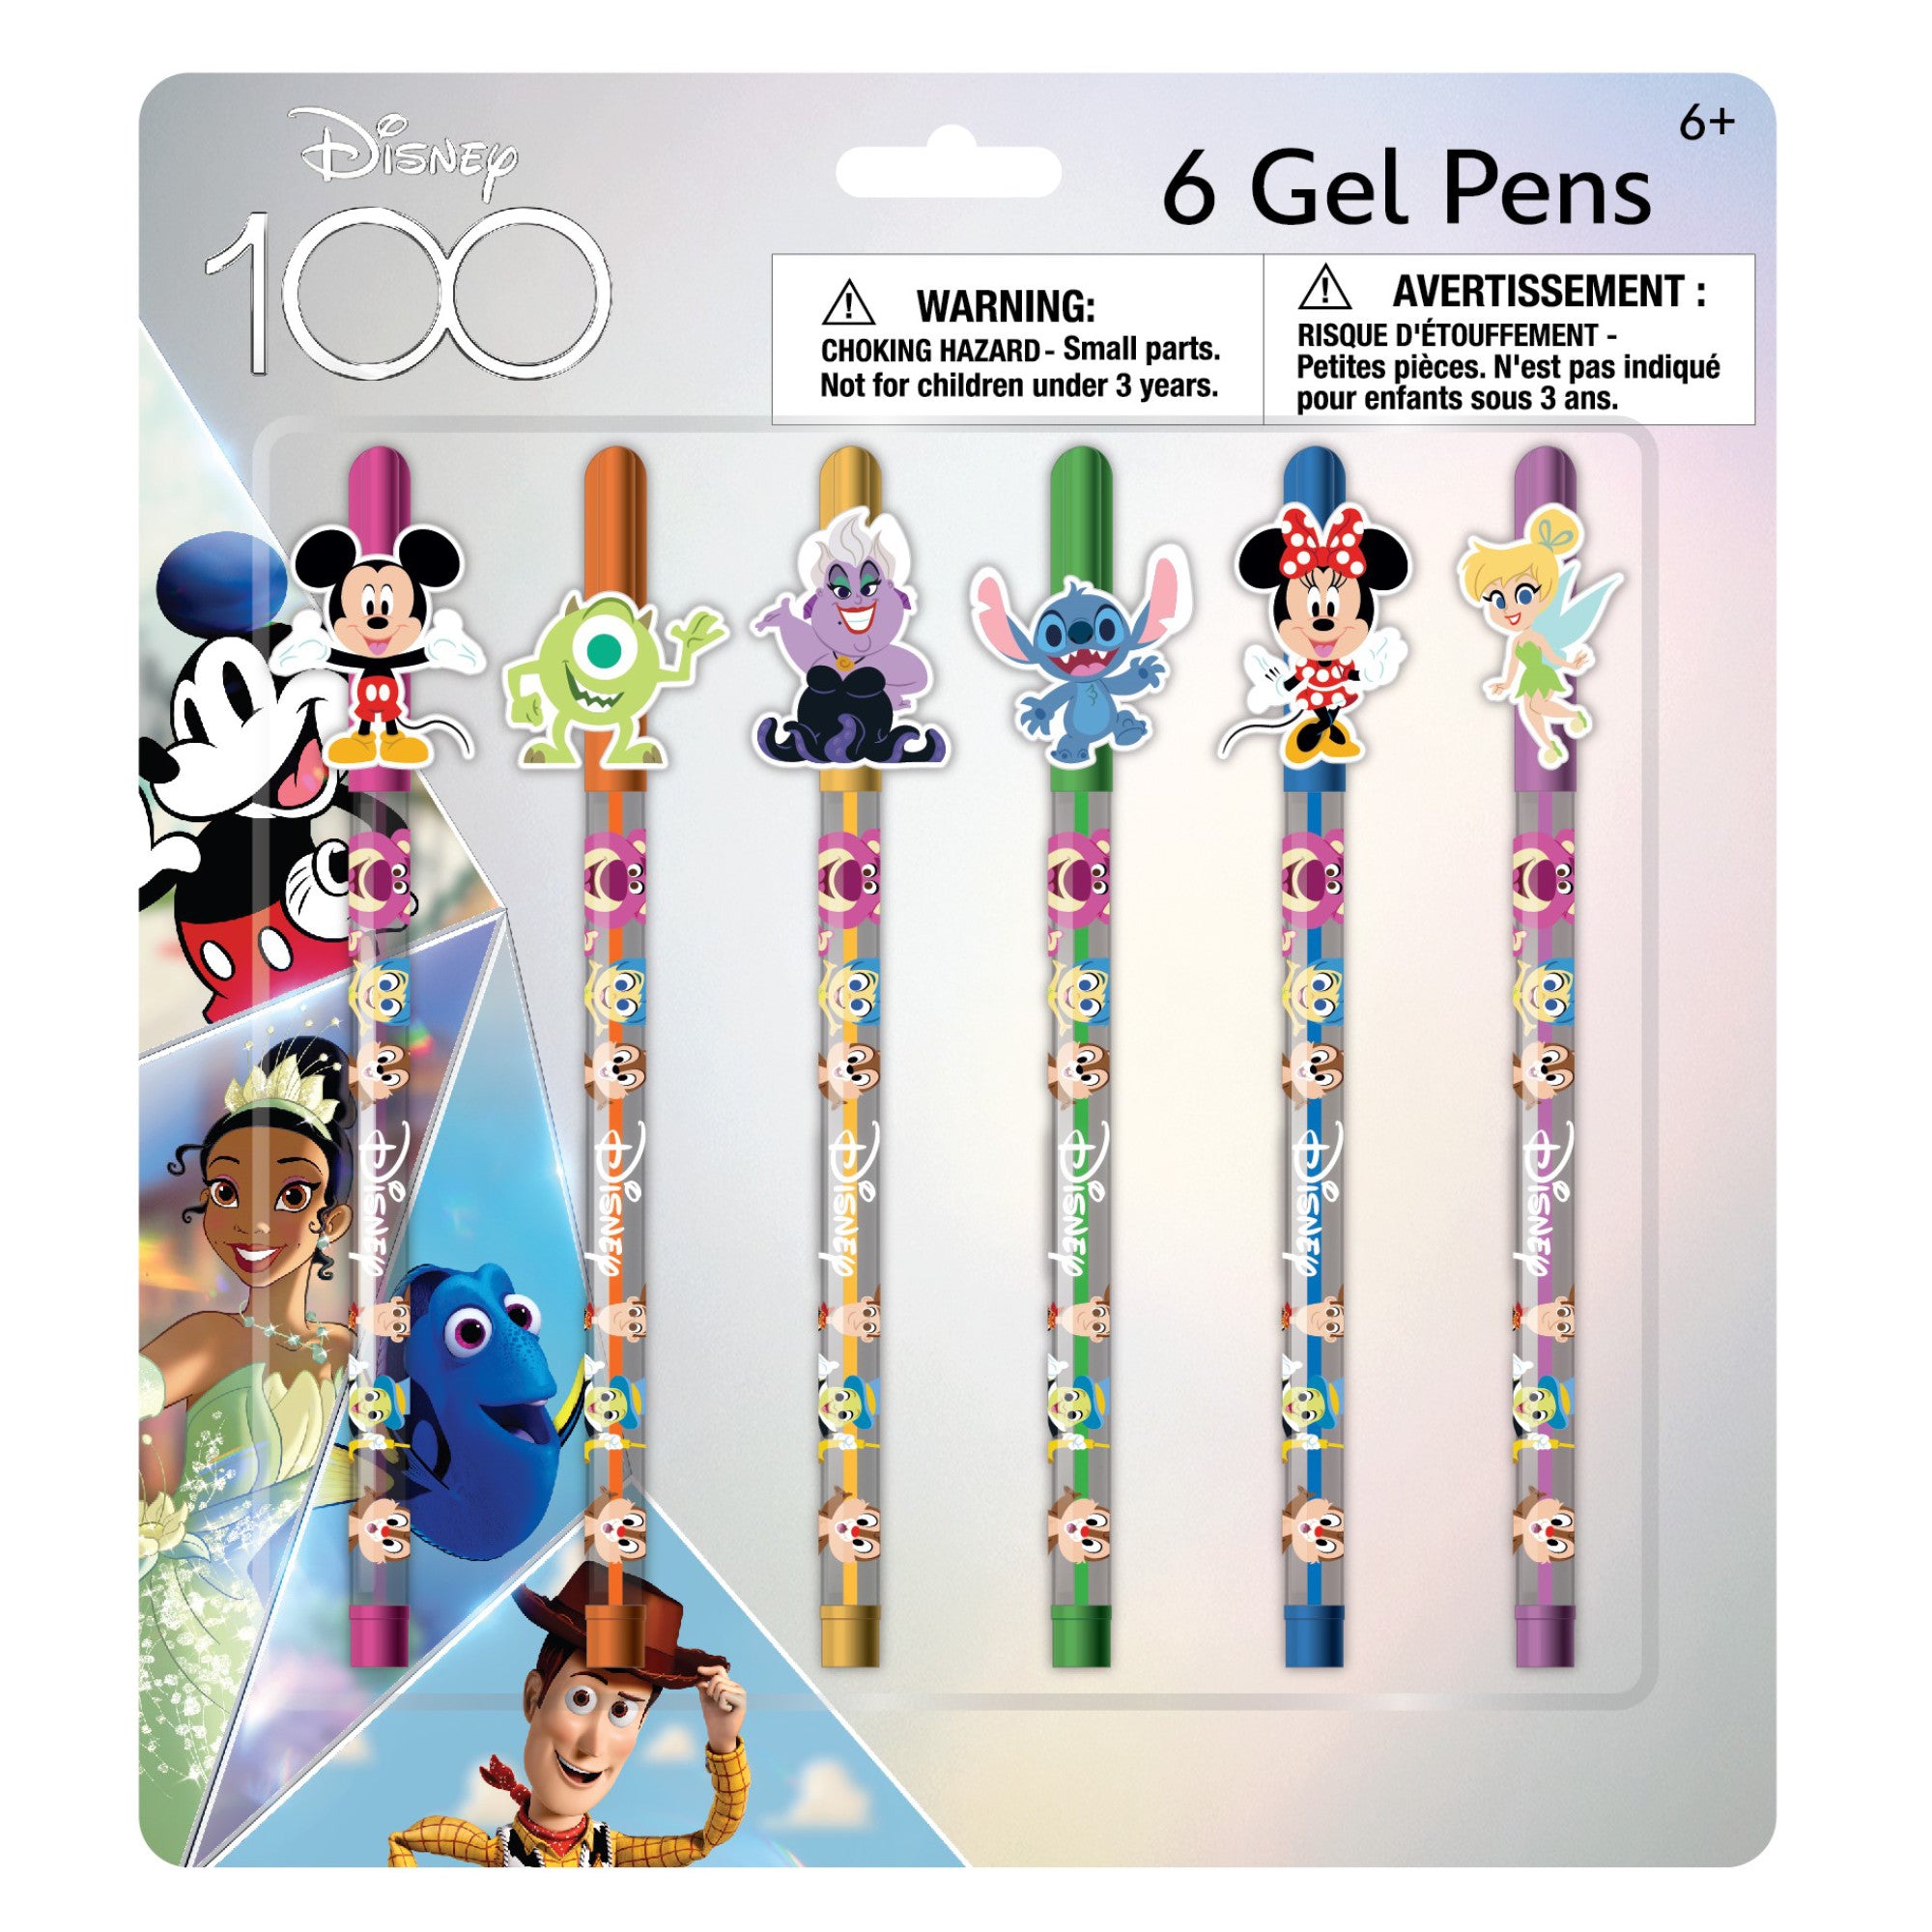 Disney 100 6 Pack Gel Pen Set